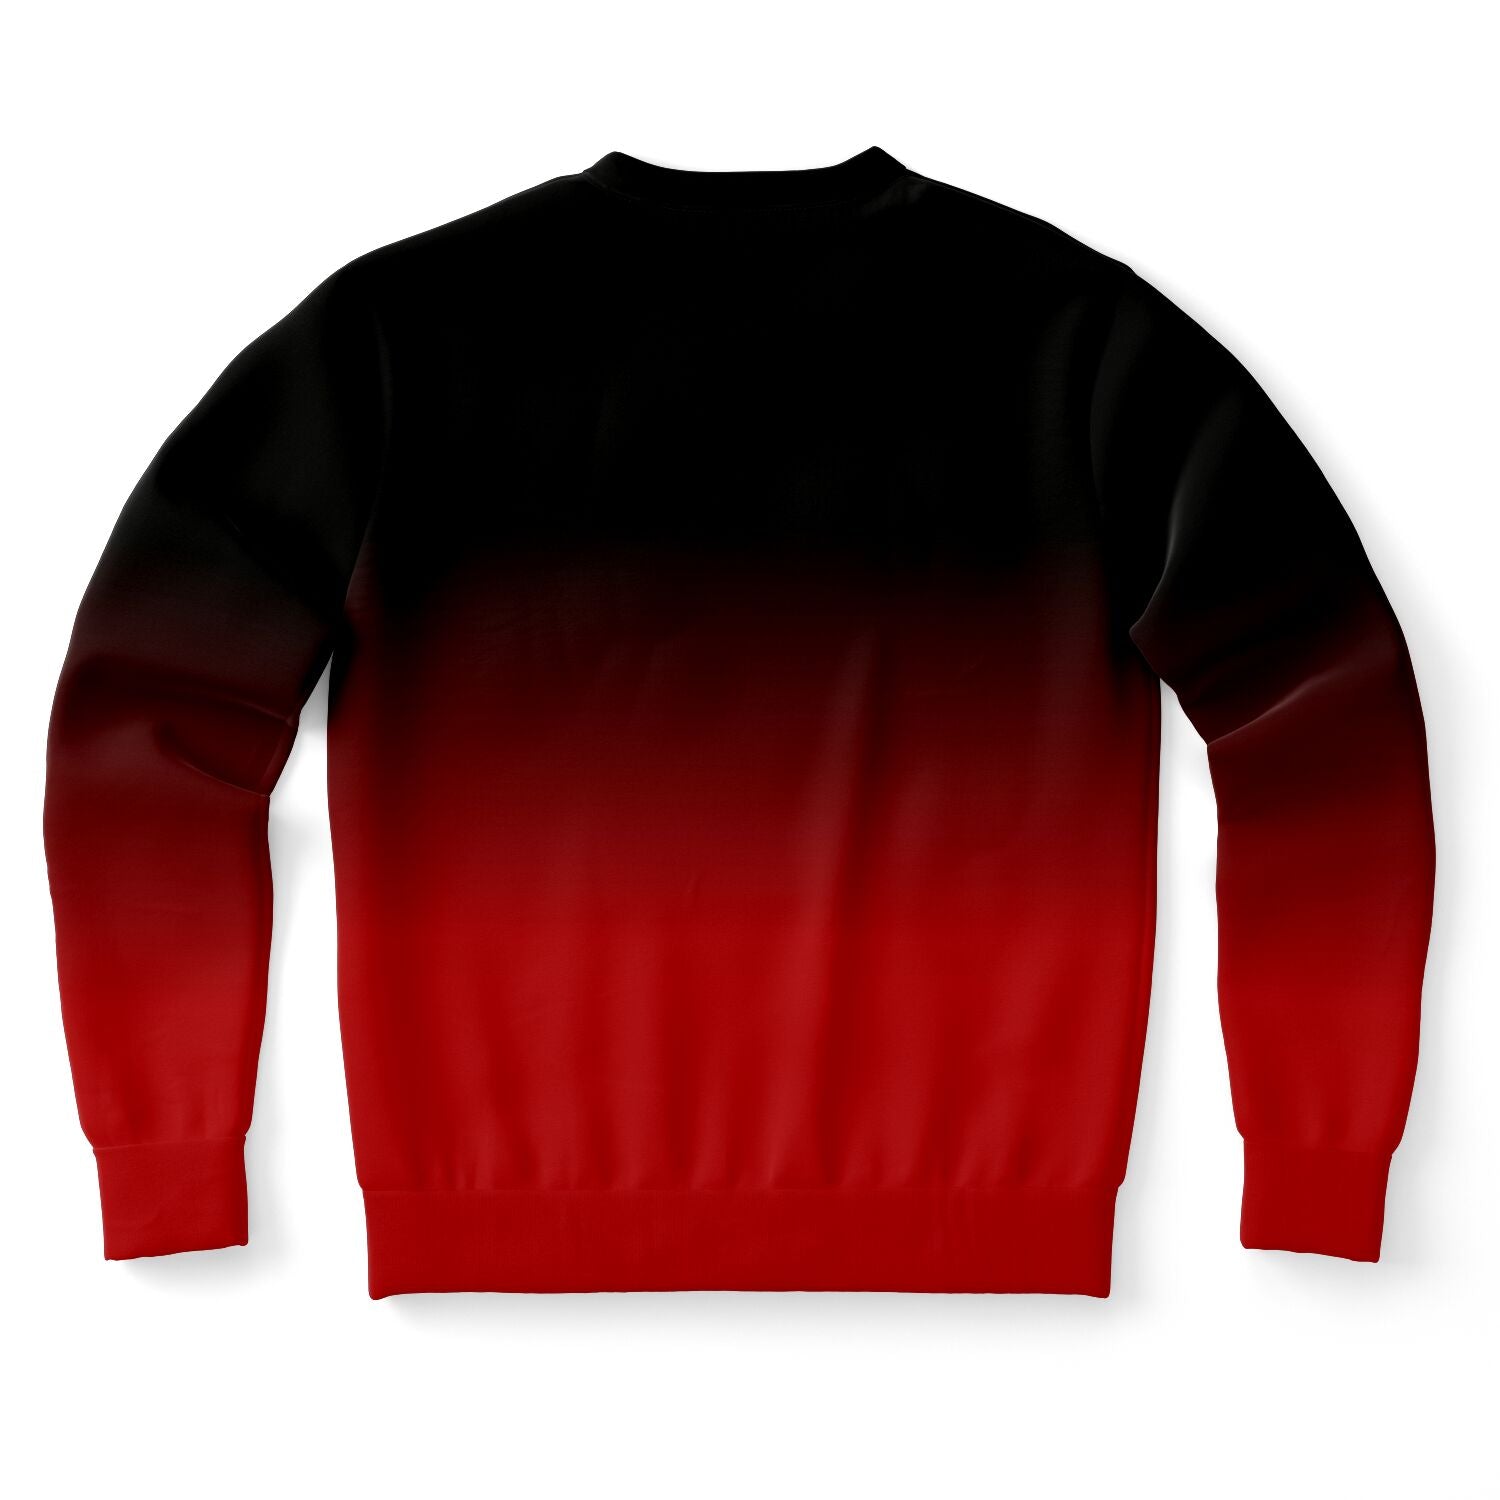 Red Black Ombre Sweatshirt, Gradient Tie Dye Graphic Crewneck Fleece Cotton Sweater Jumper Pullover Men Women Adult Aesthetic Top Starcove Fashion